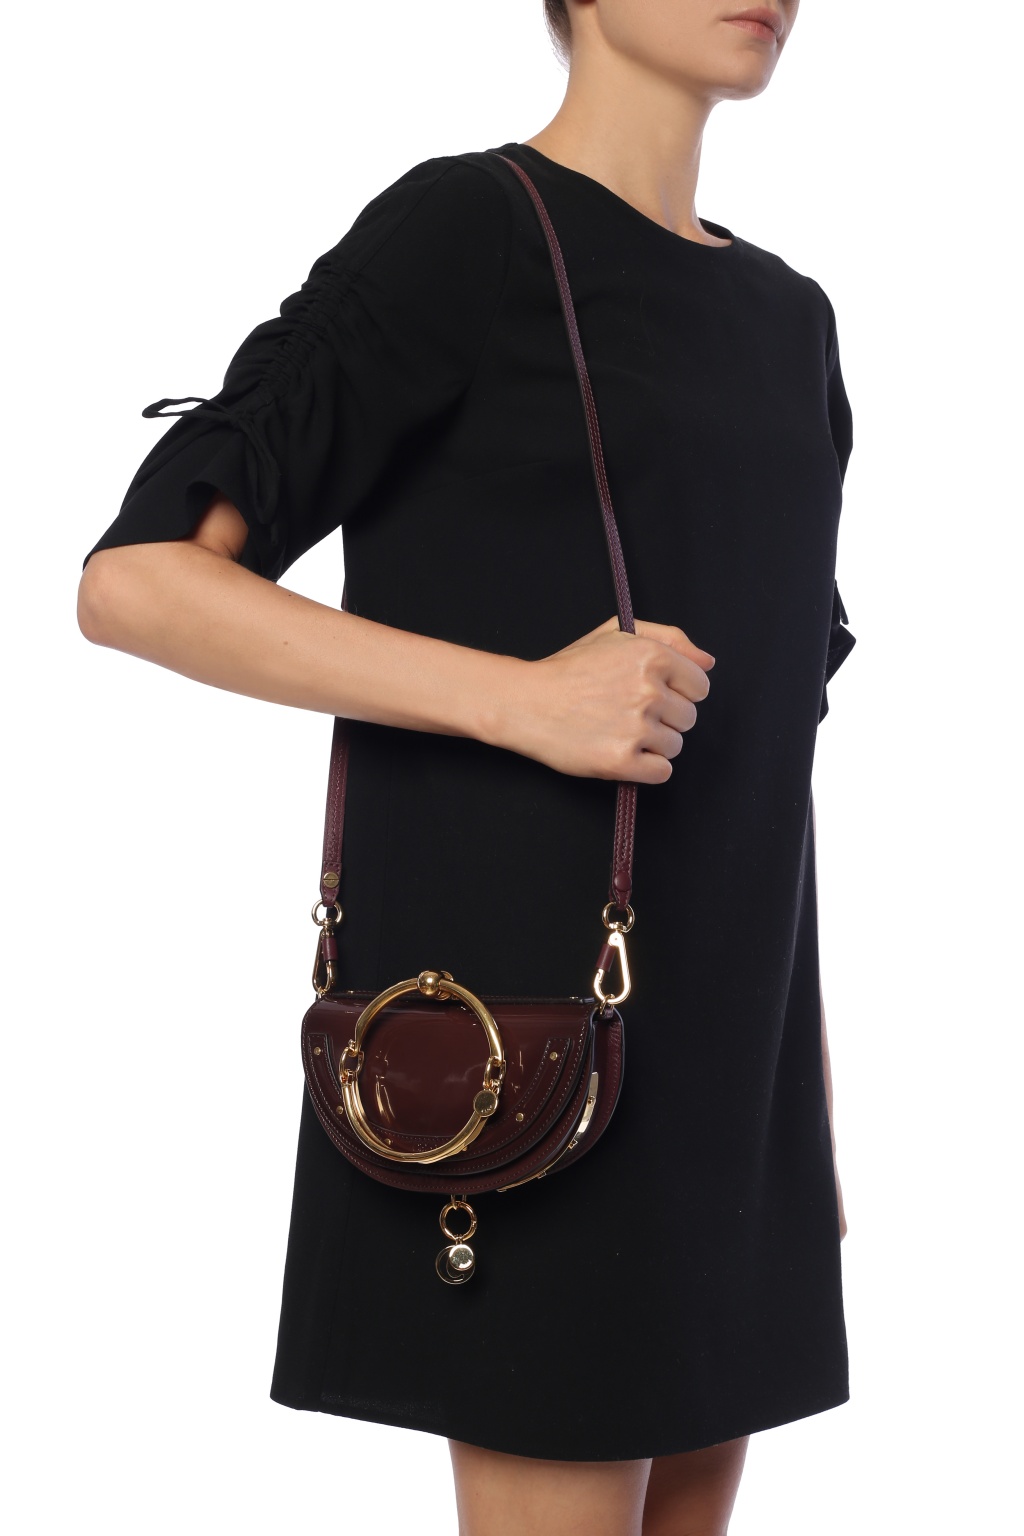 Chloe Brown Leather Small Nile Bracelet Minaudiere Crossbody Bag